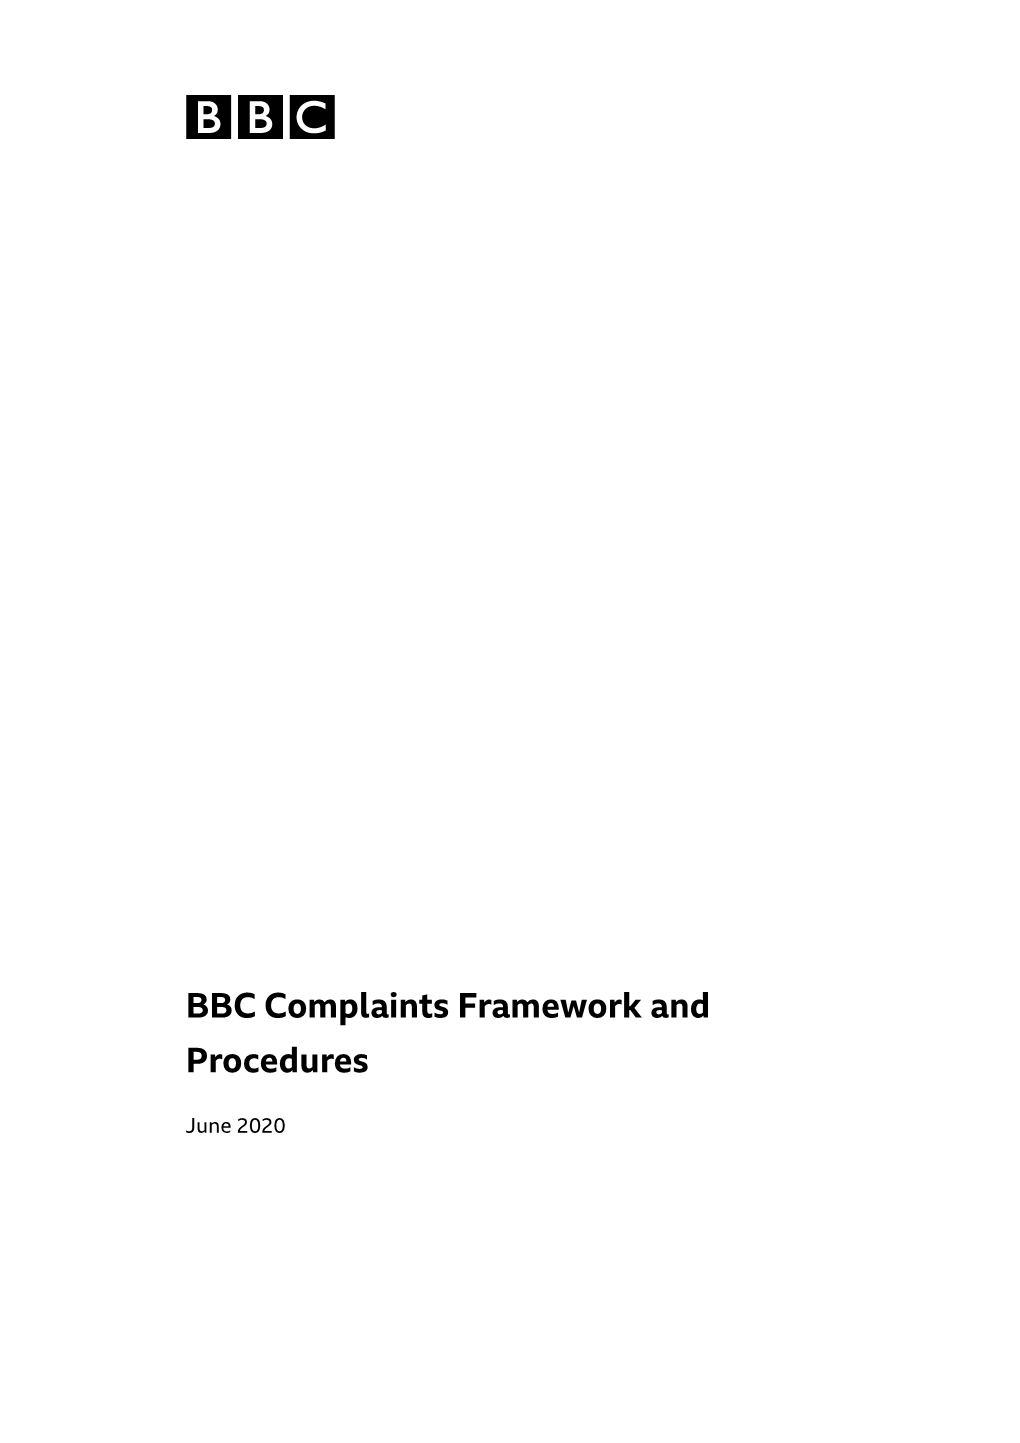 BBC Complaints Framework and Procedures